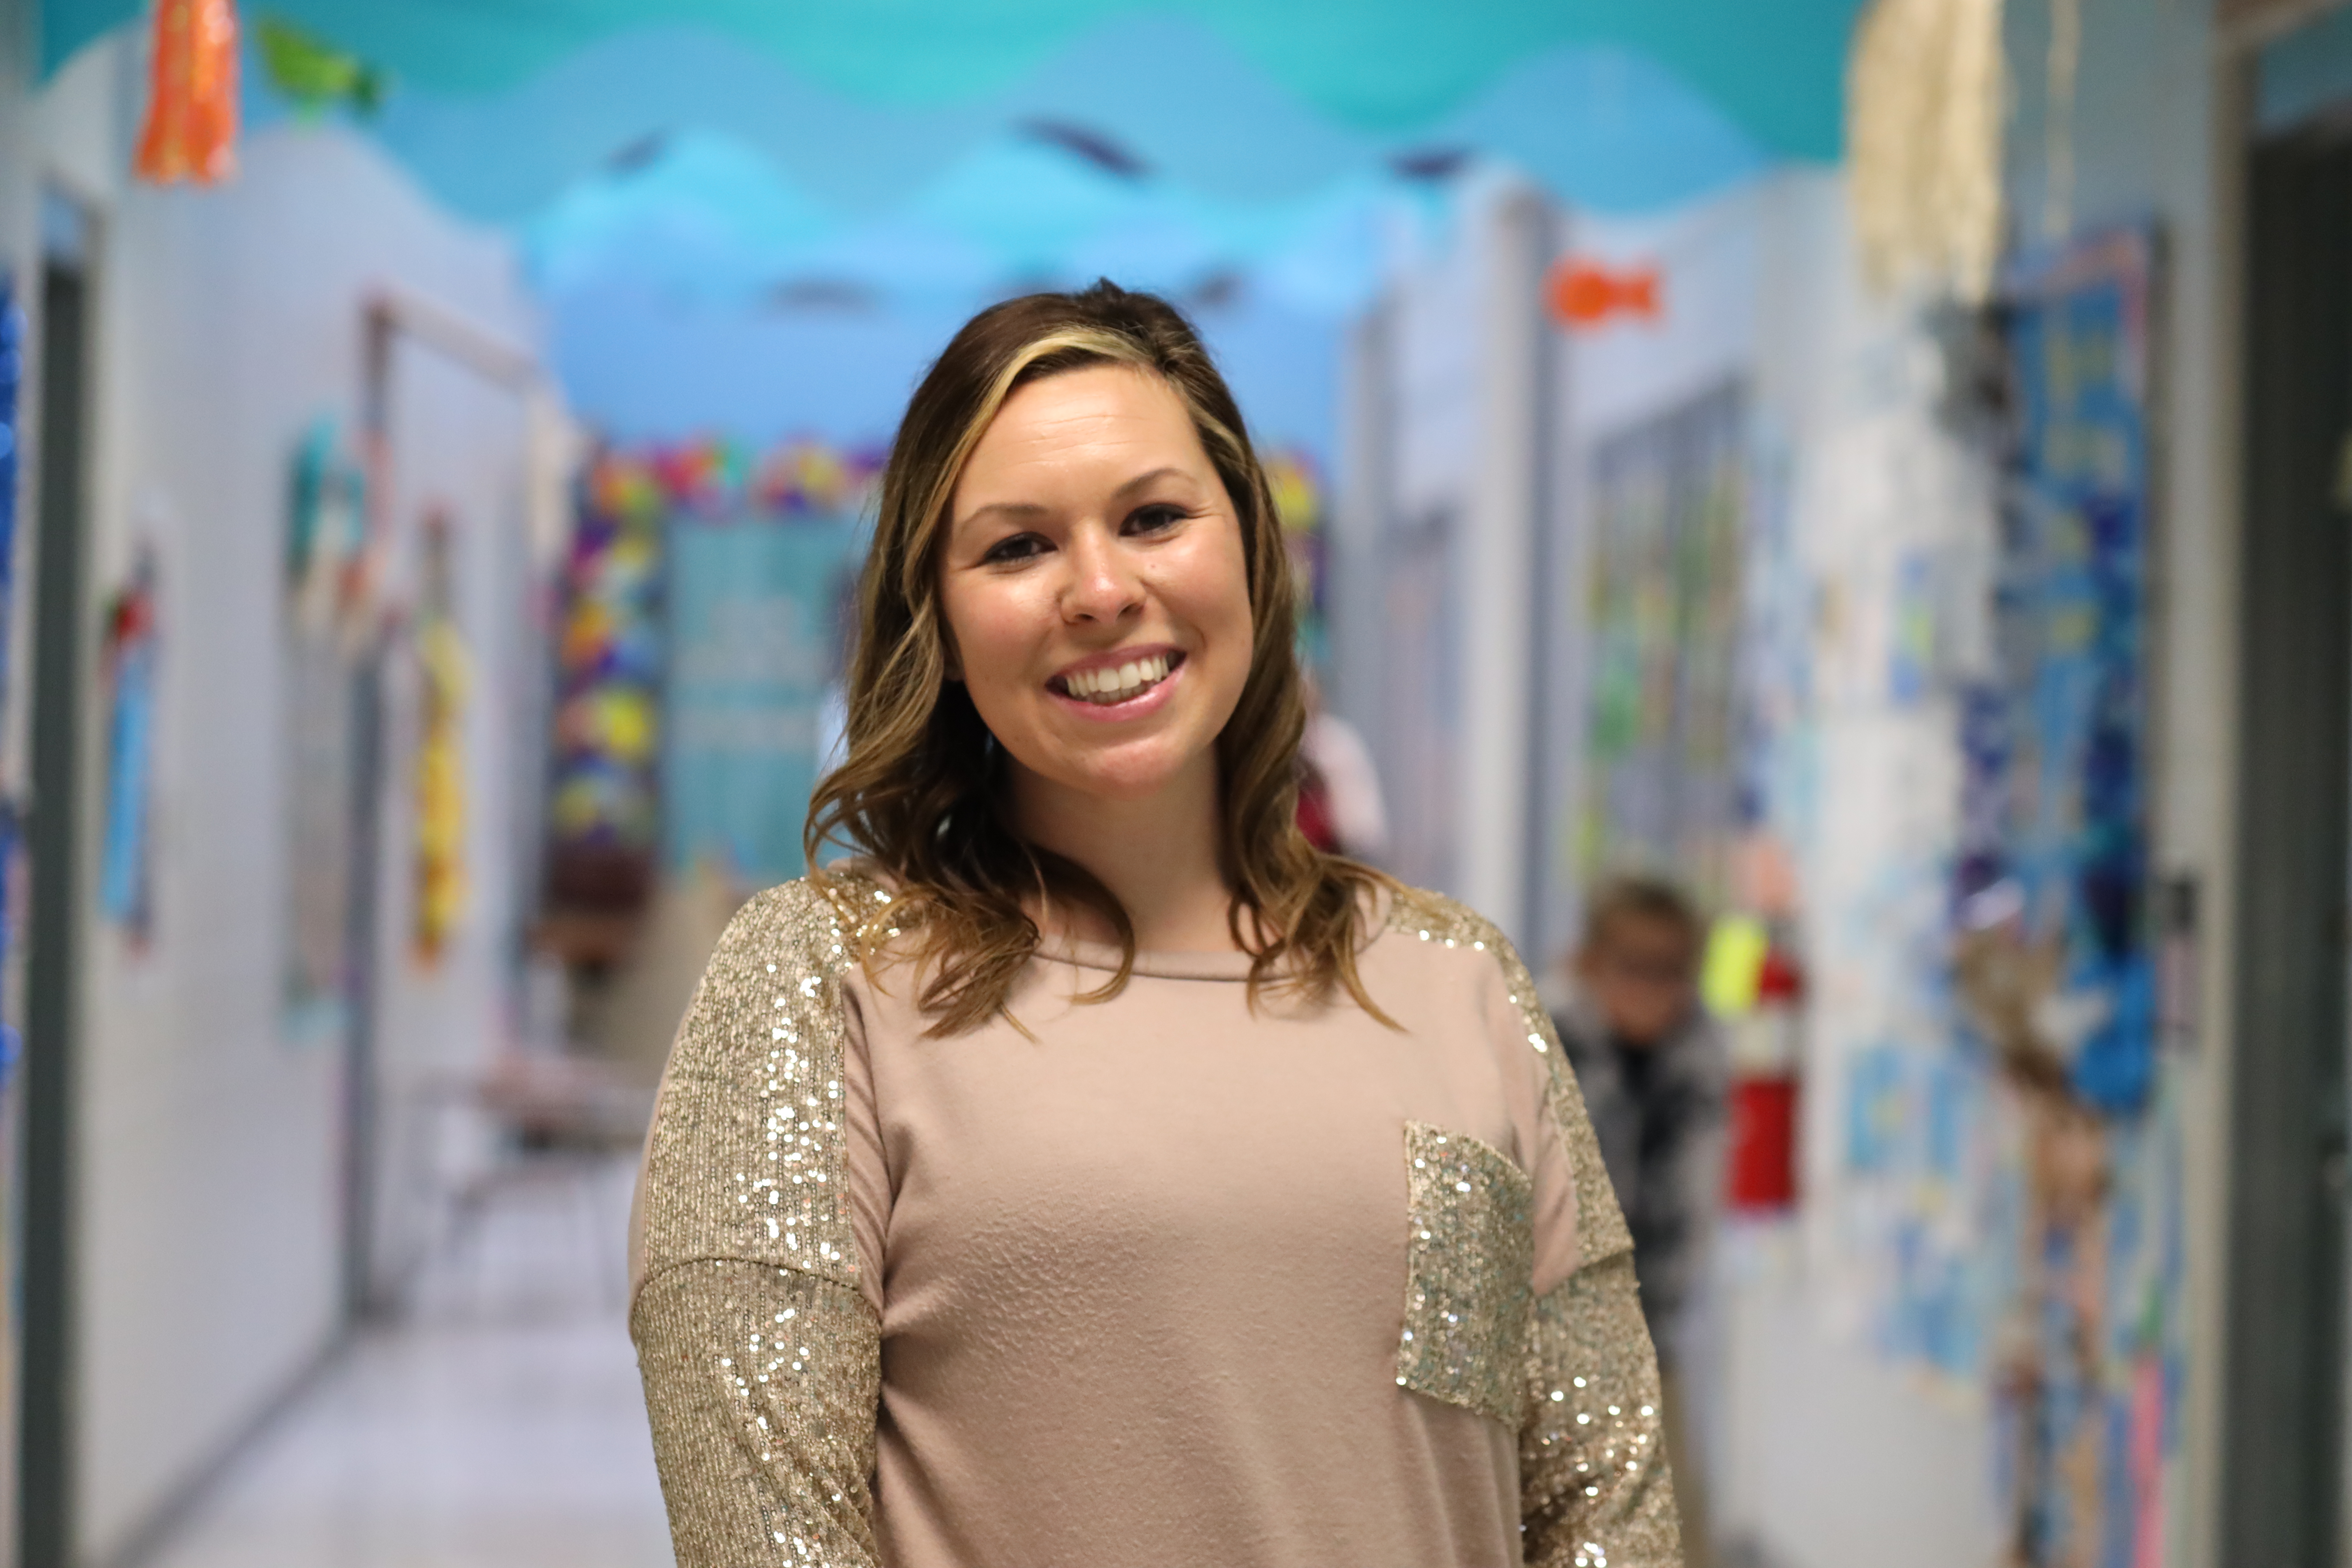 Megan Carney smiling in the hallway at Bovina Elementary School.